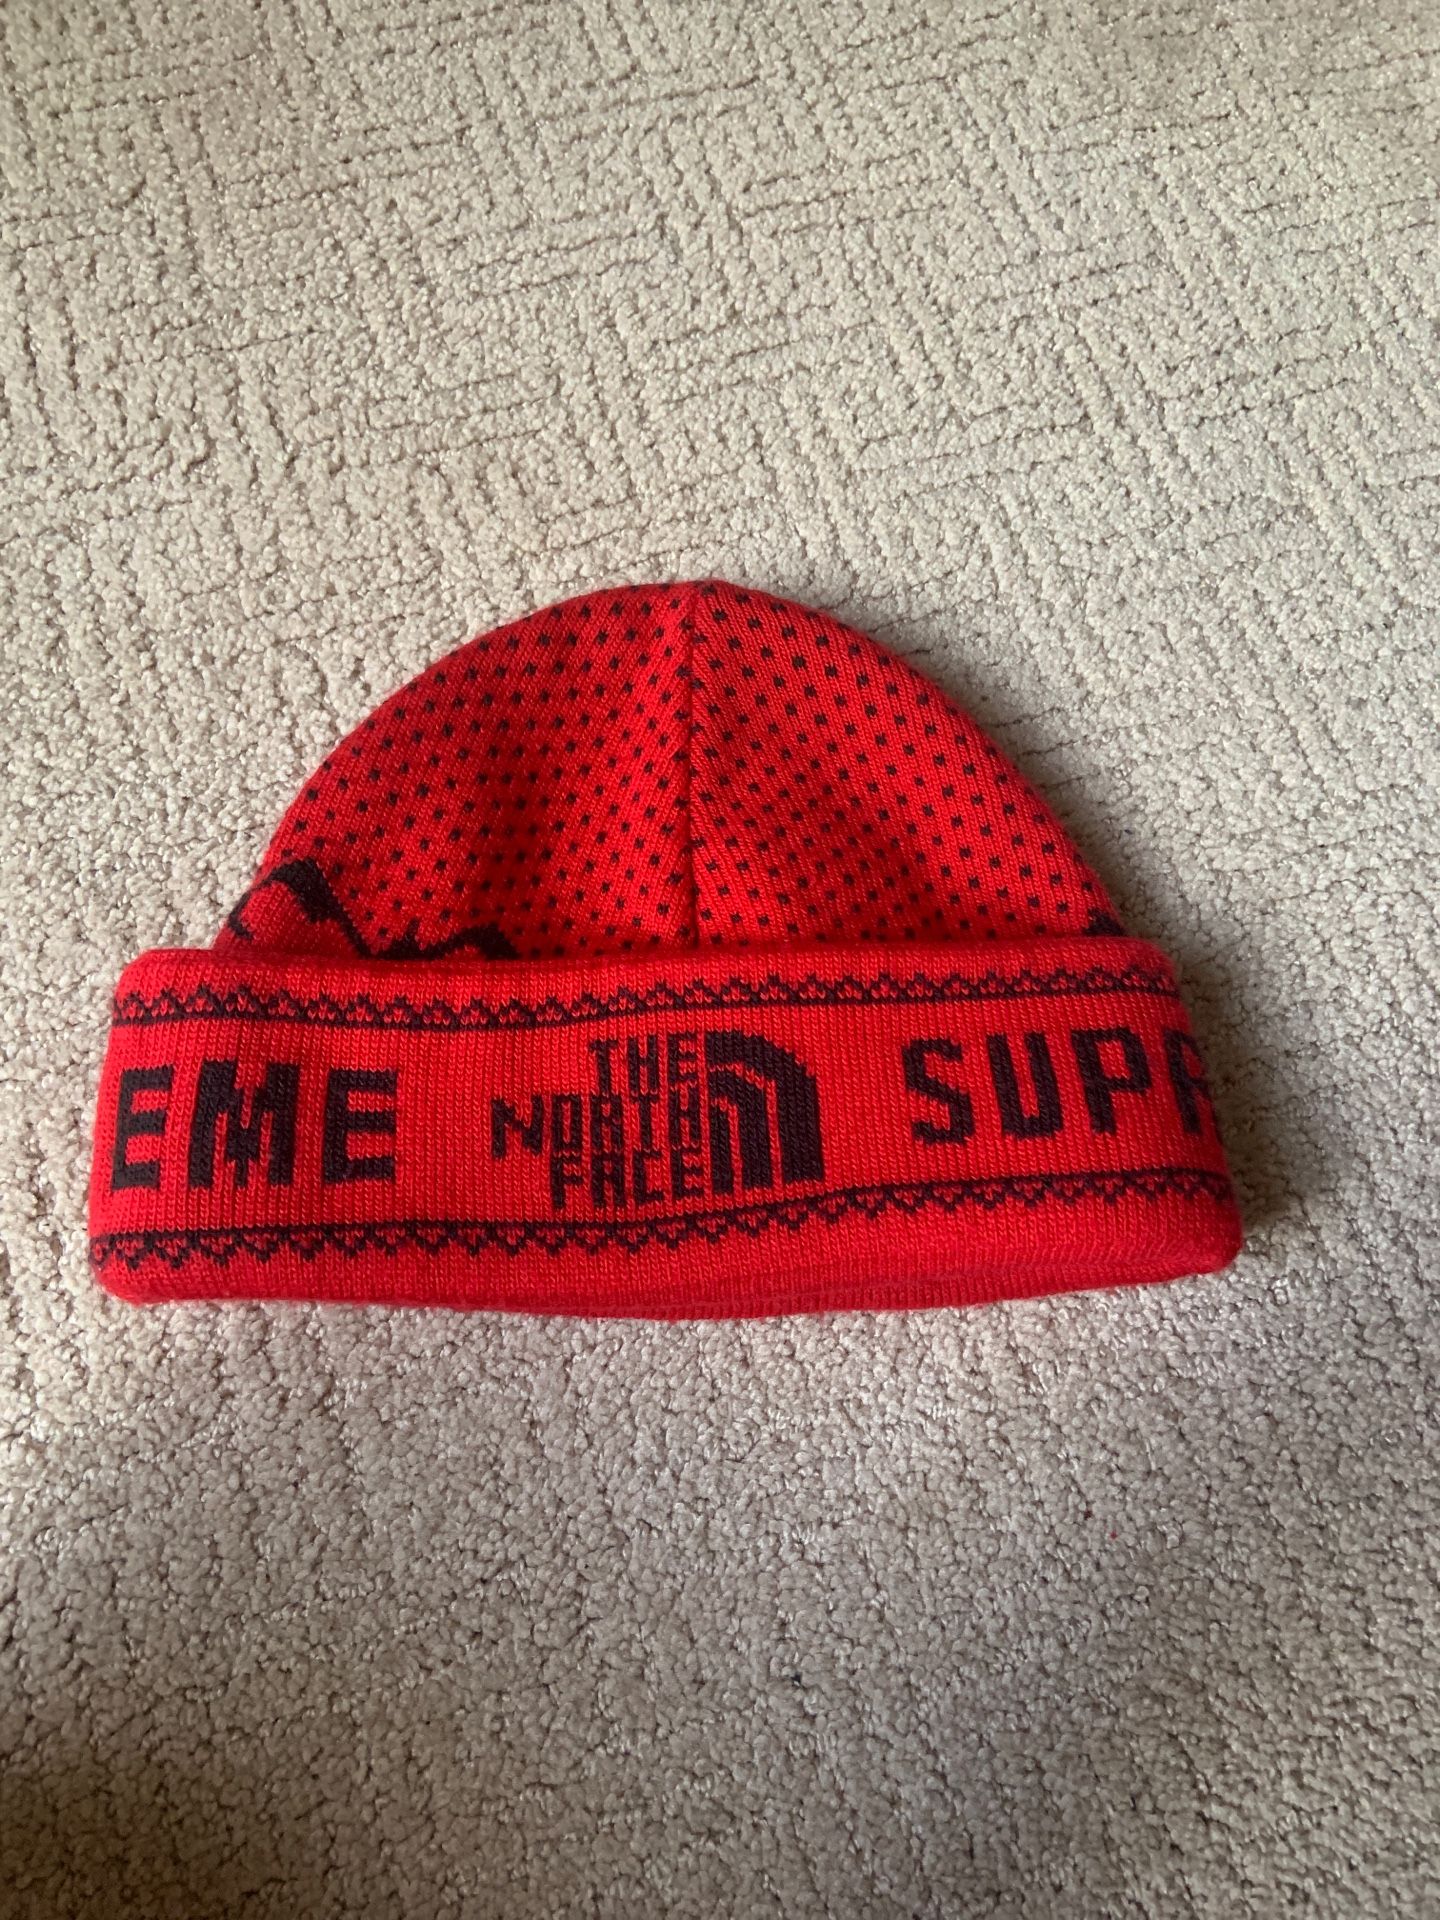 SUPREME HAT